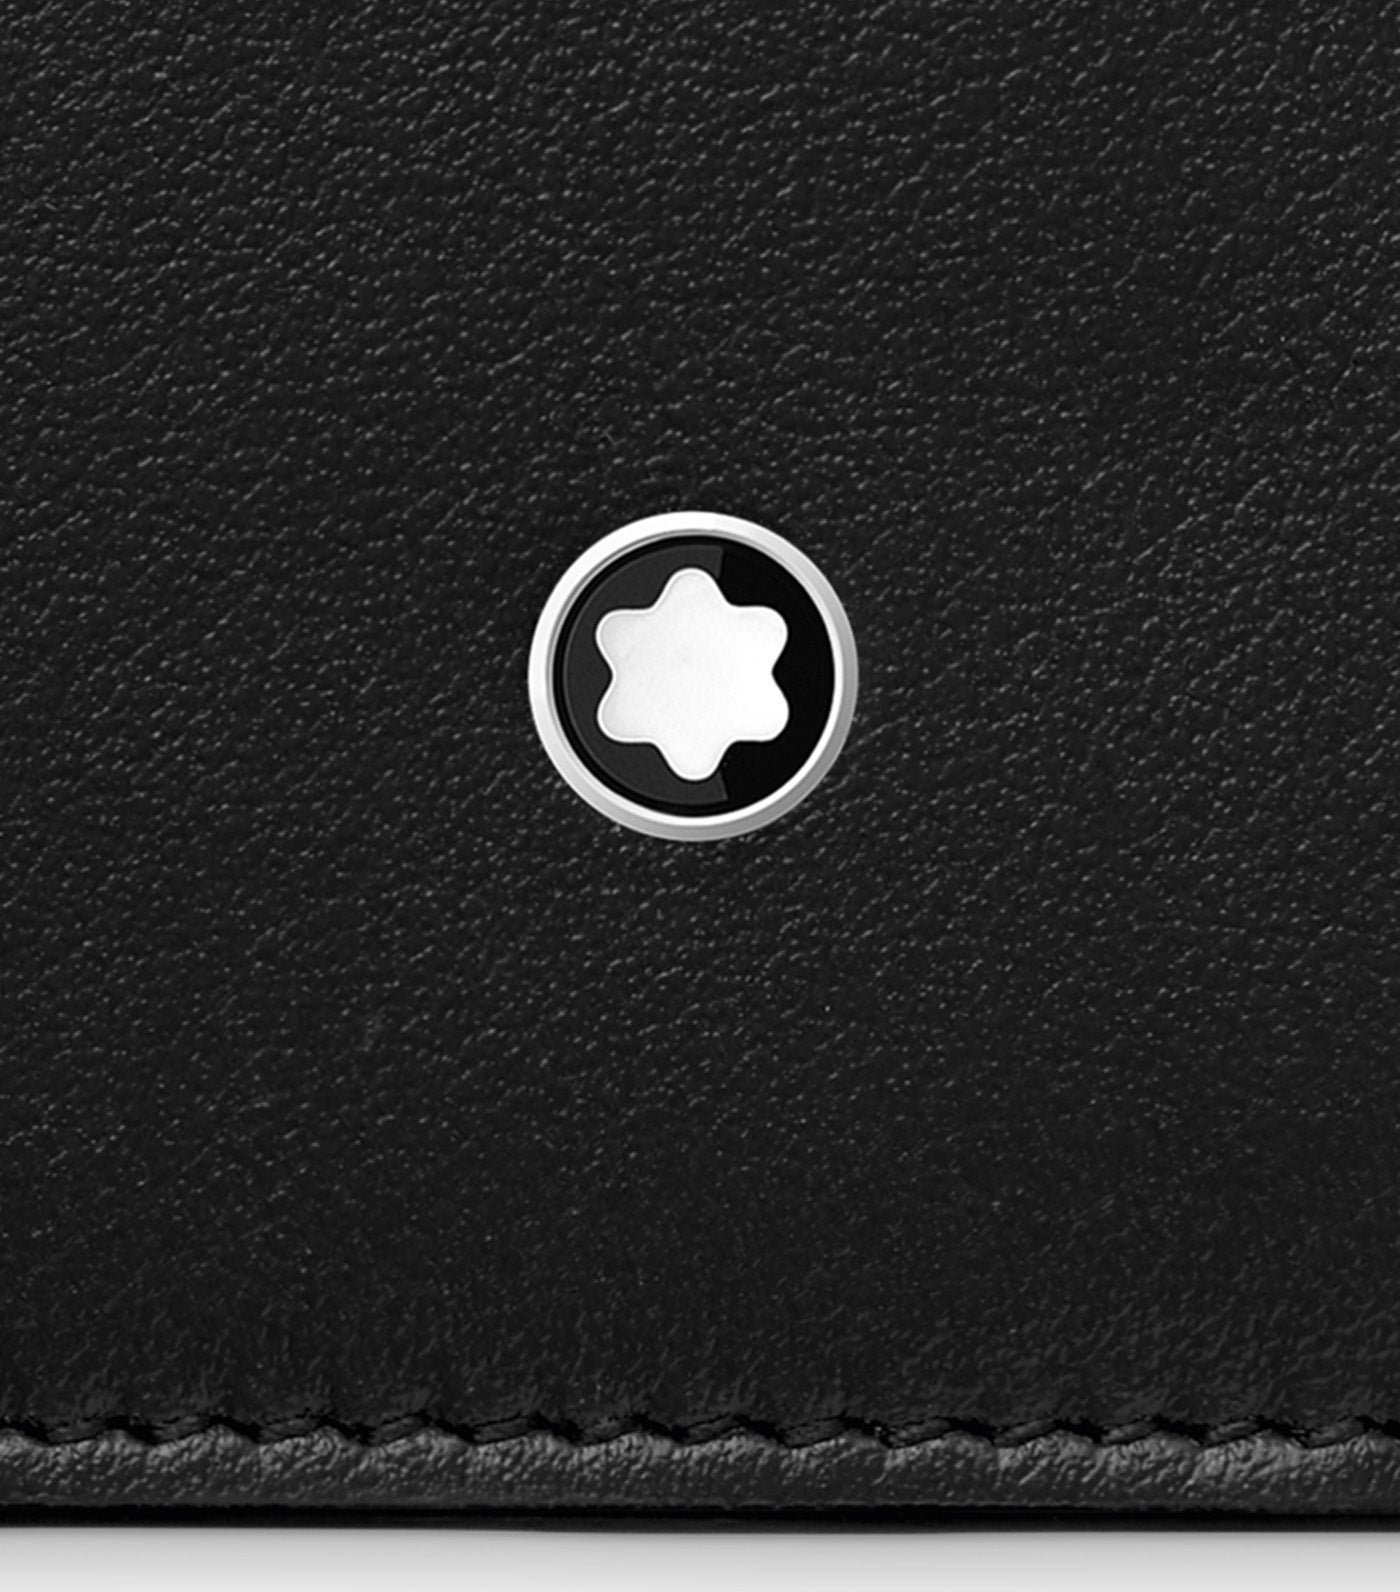 Meisterstück Pocket Holder 8cc with Zipped Pocket Black